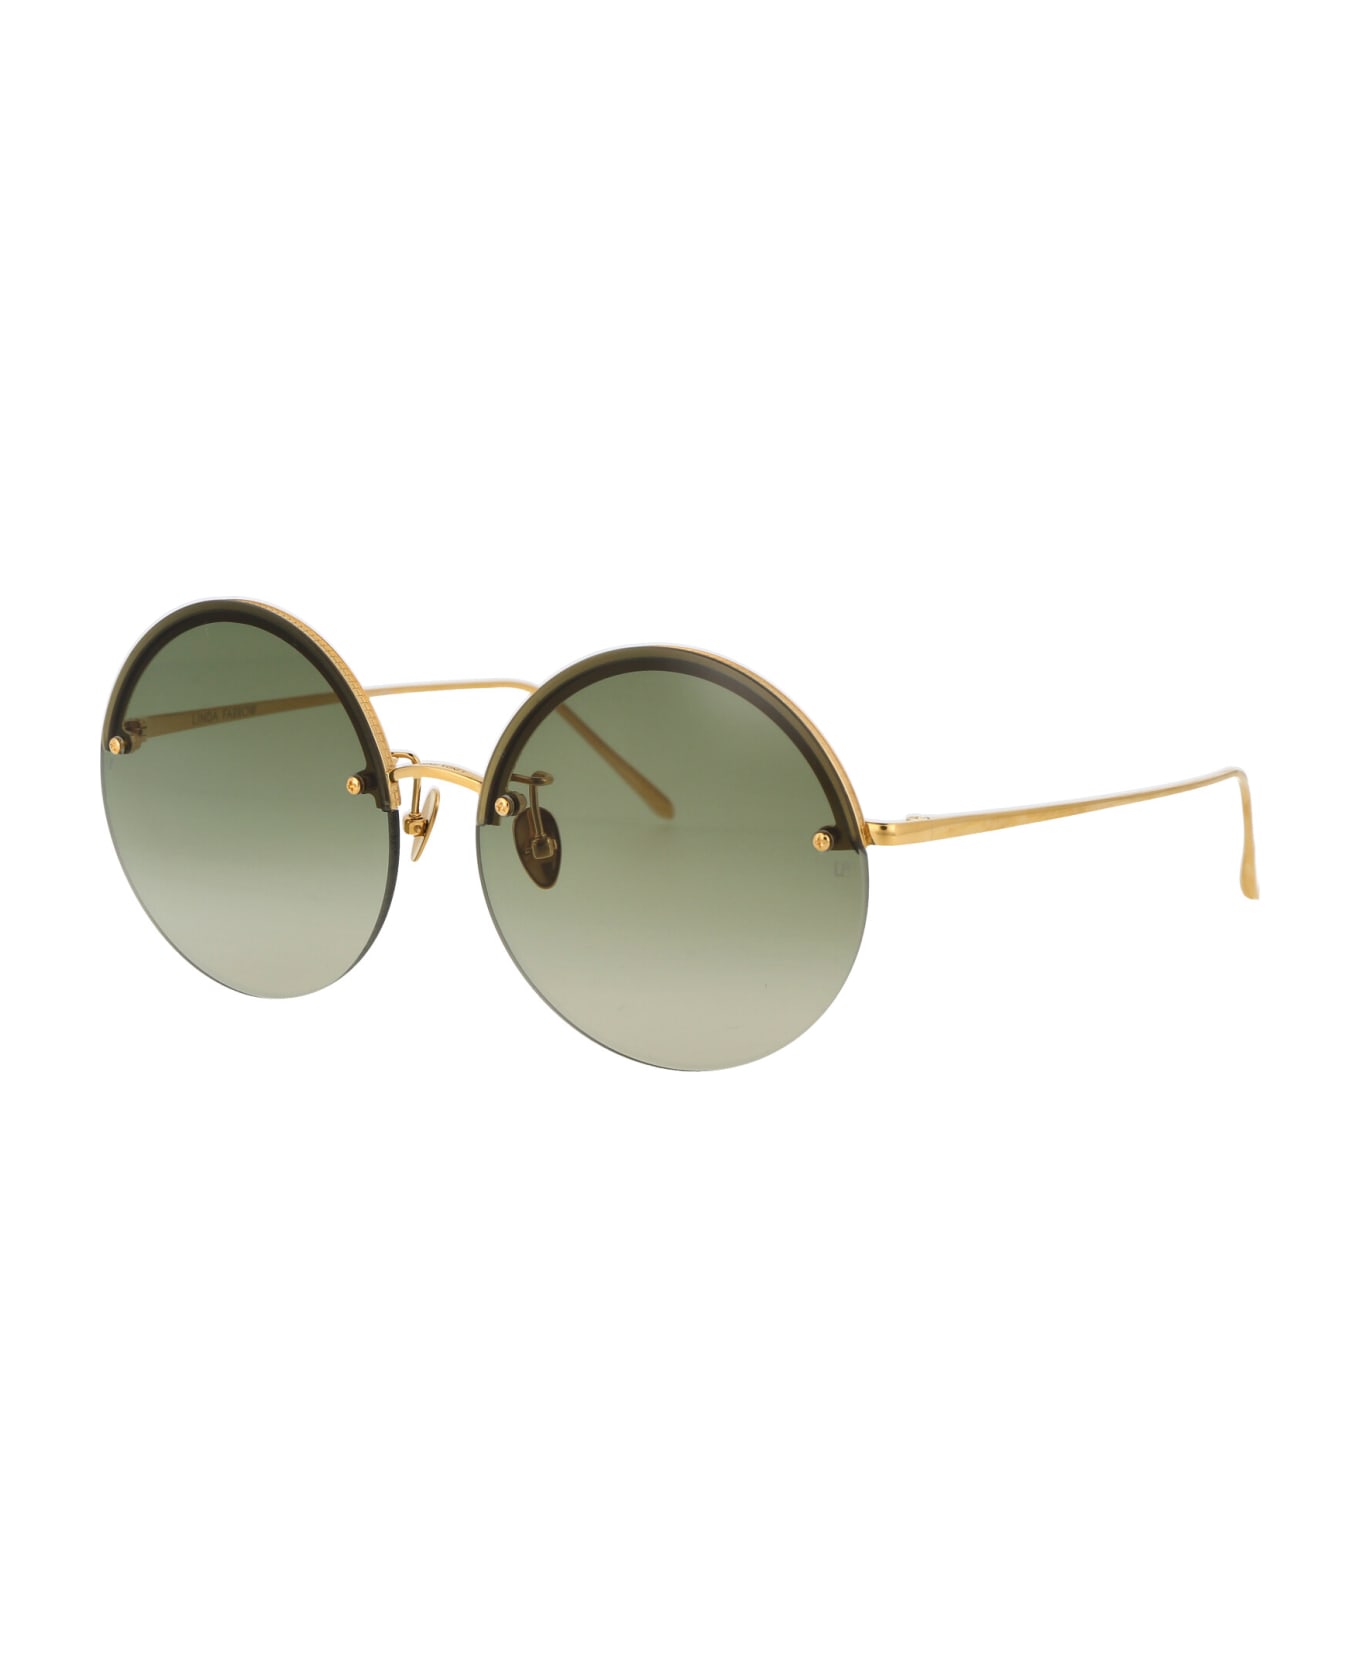 Linda Farrow Adrienne Sunglasses - 002 YELLOW GOLD/GREEN